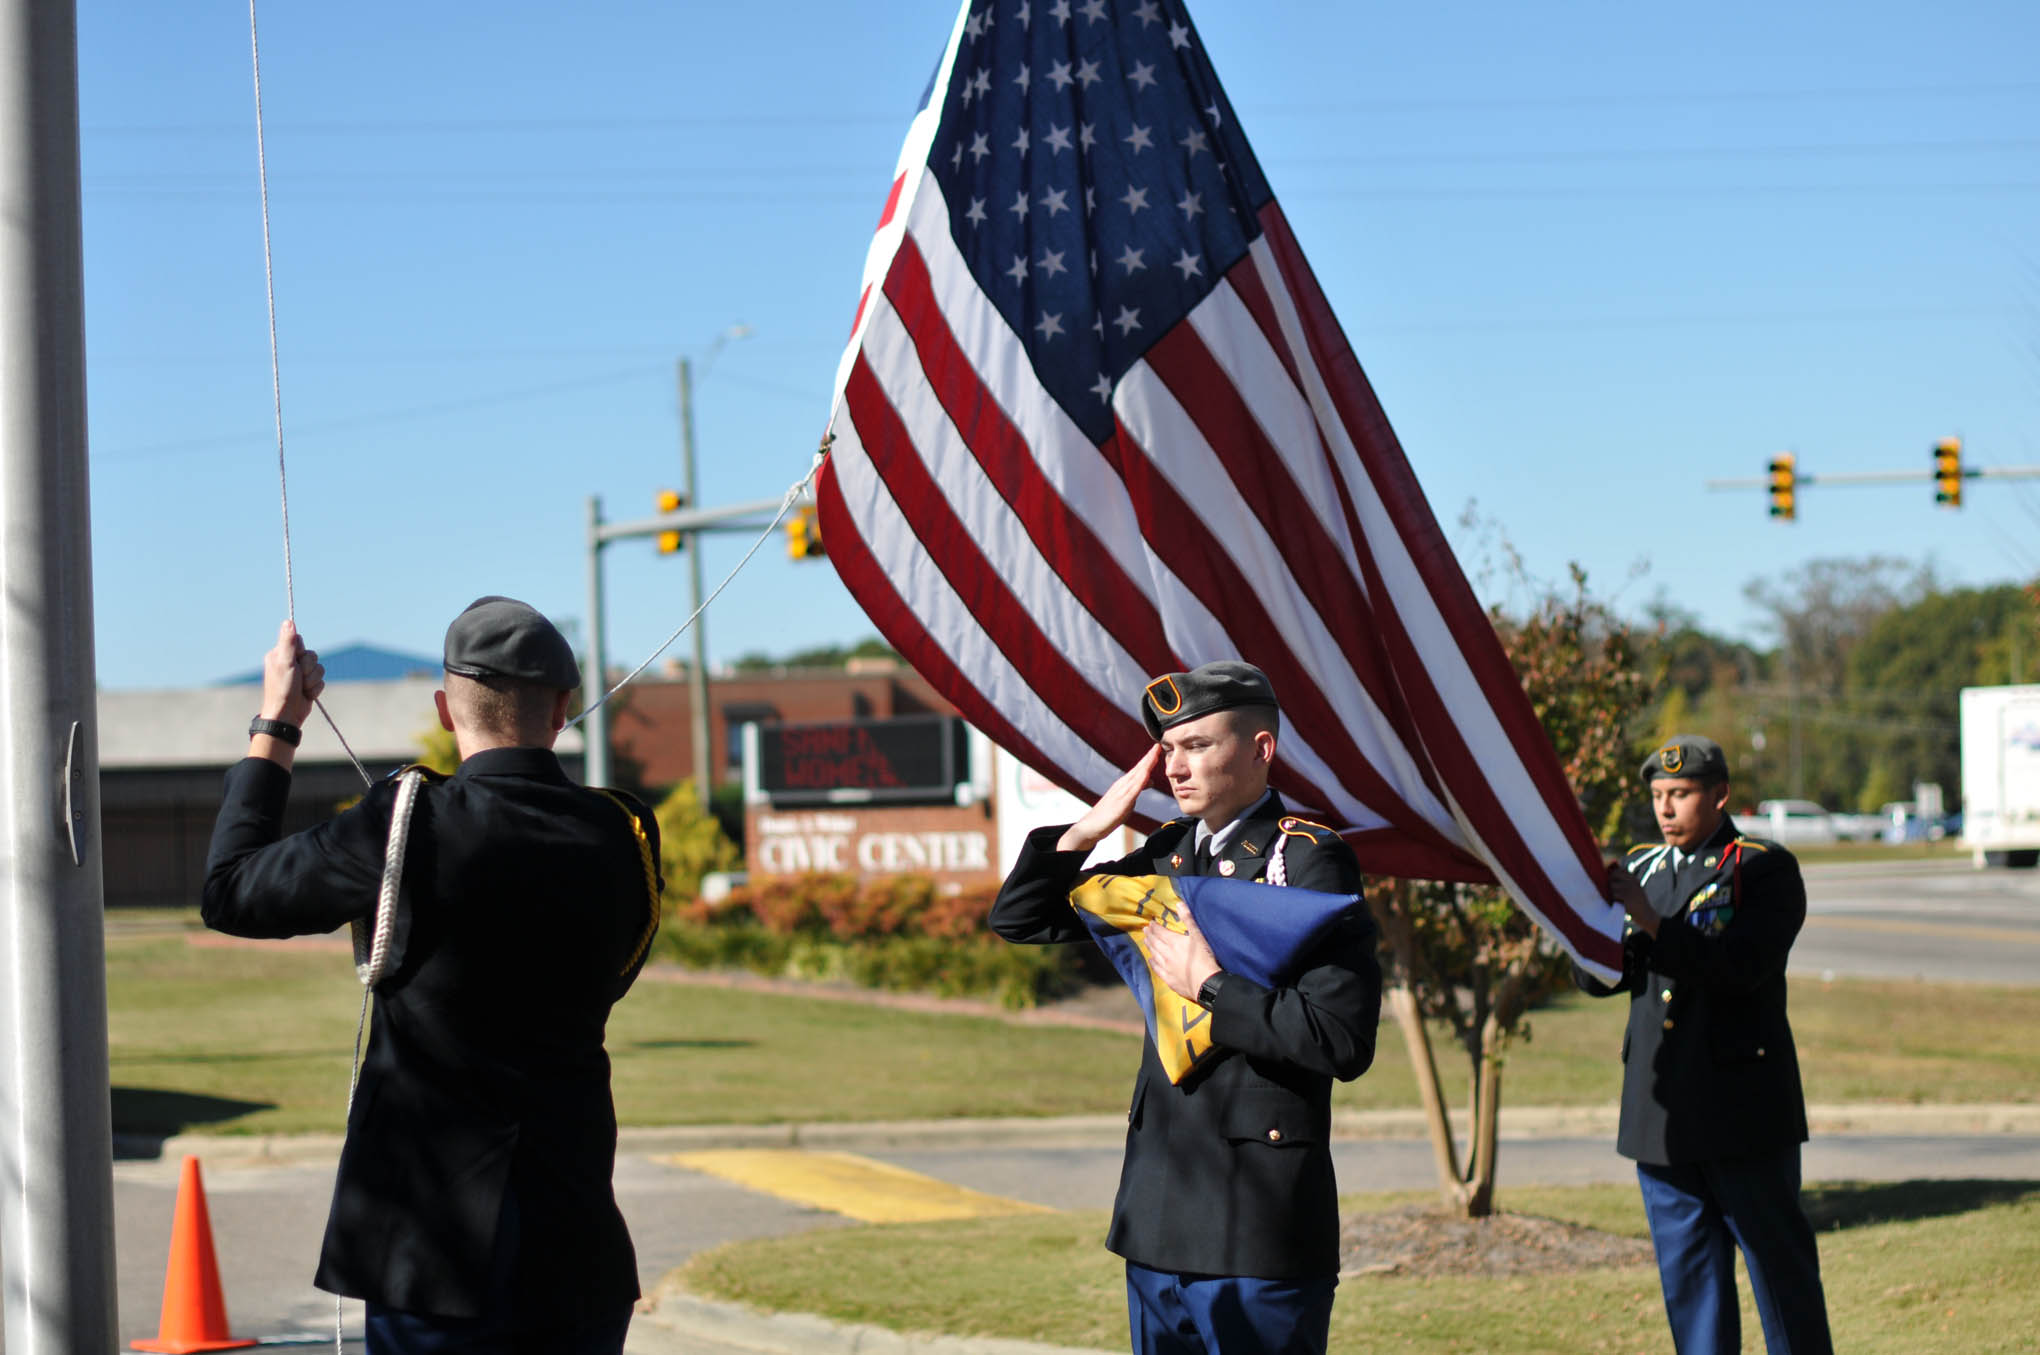 Veterans receive salute at CCCC in Sanford